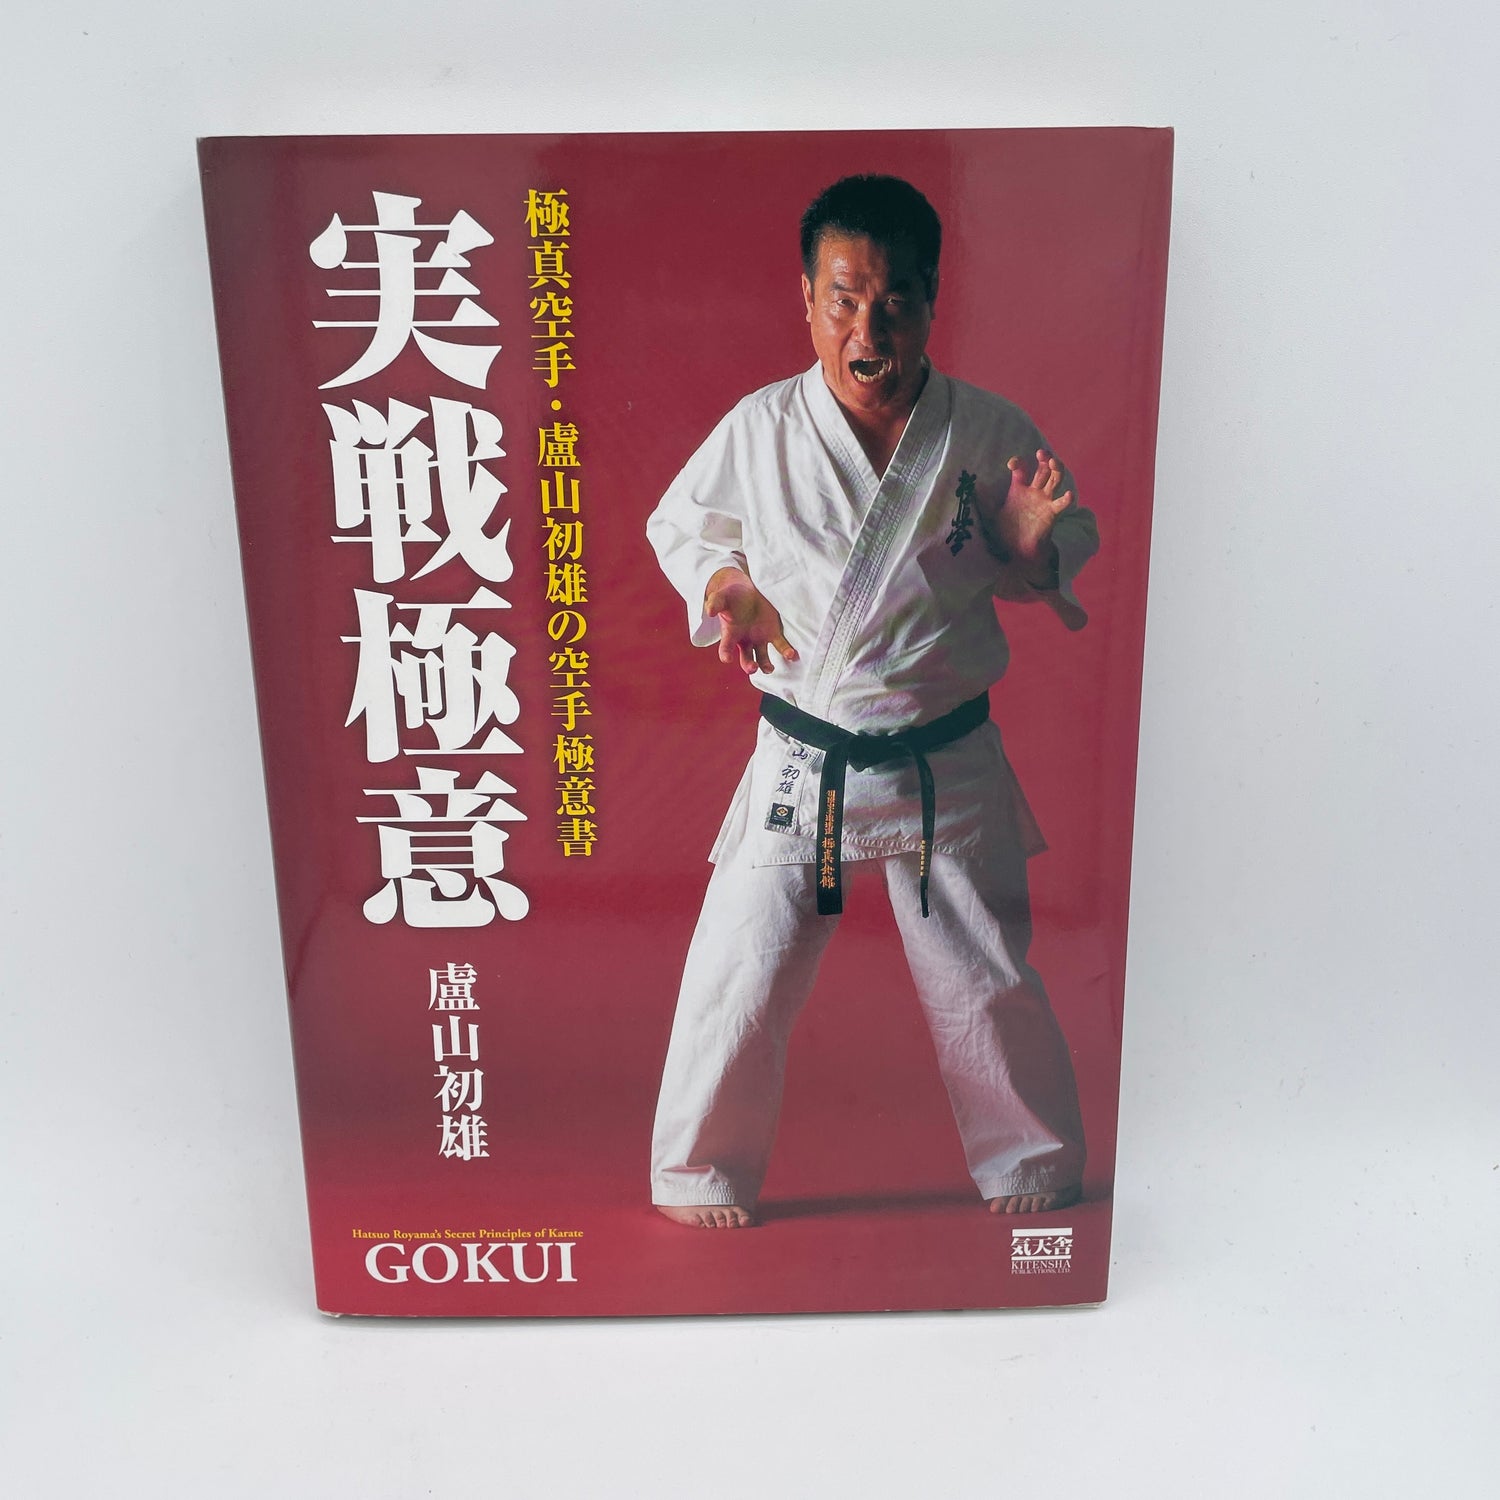 Gokui Secret Principles Of Karate Book By Hatsuo Royama (Preowned)